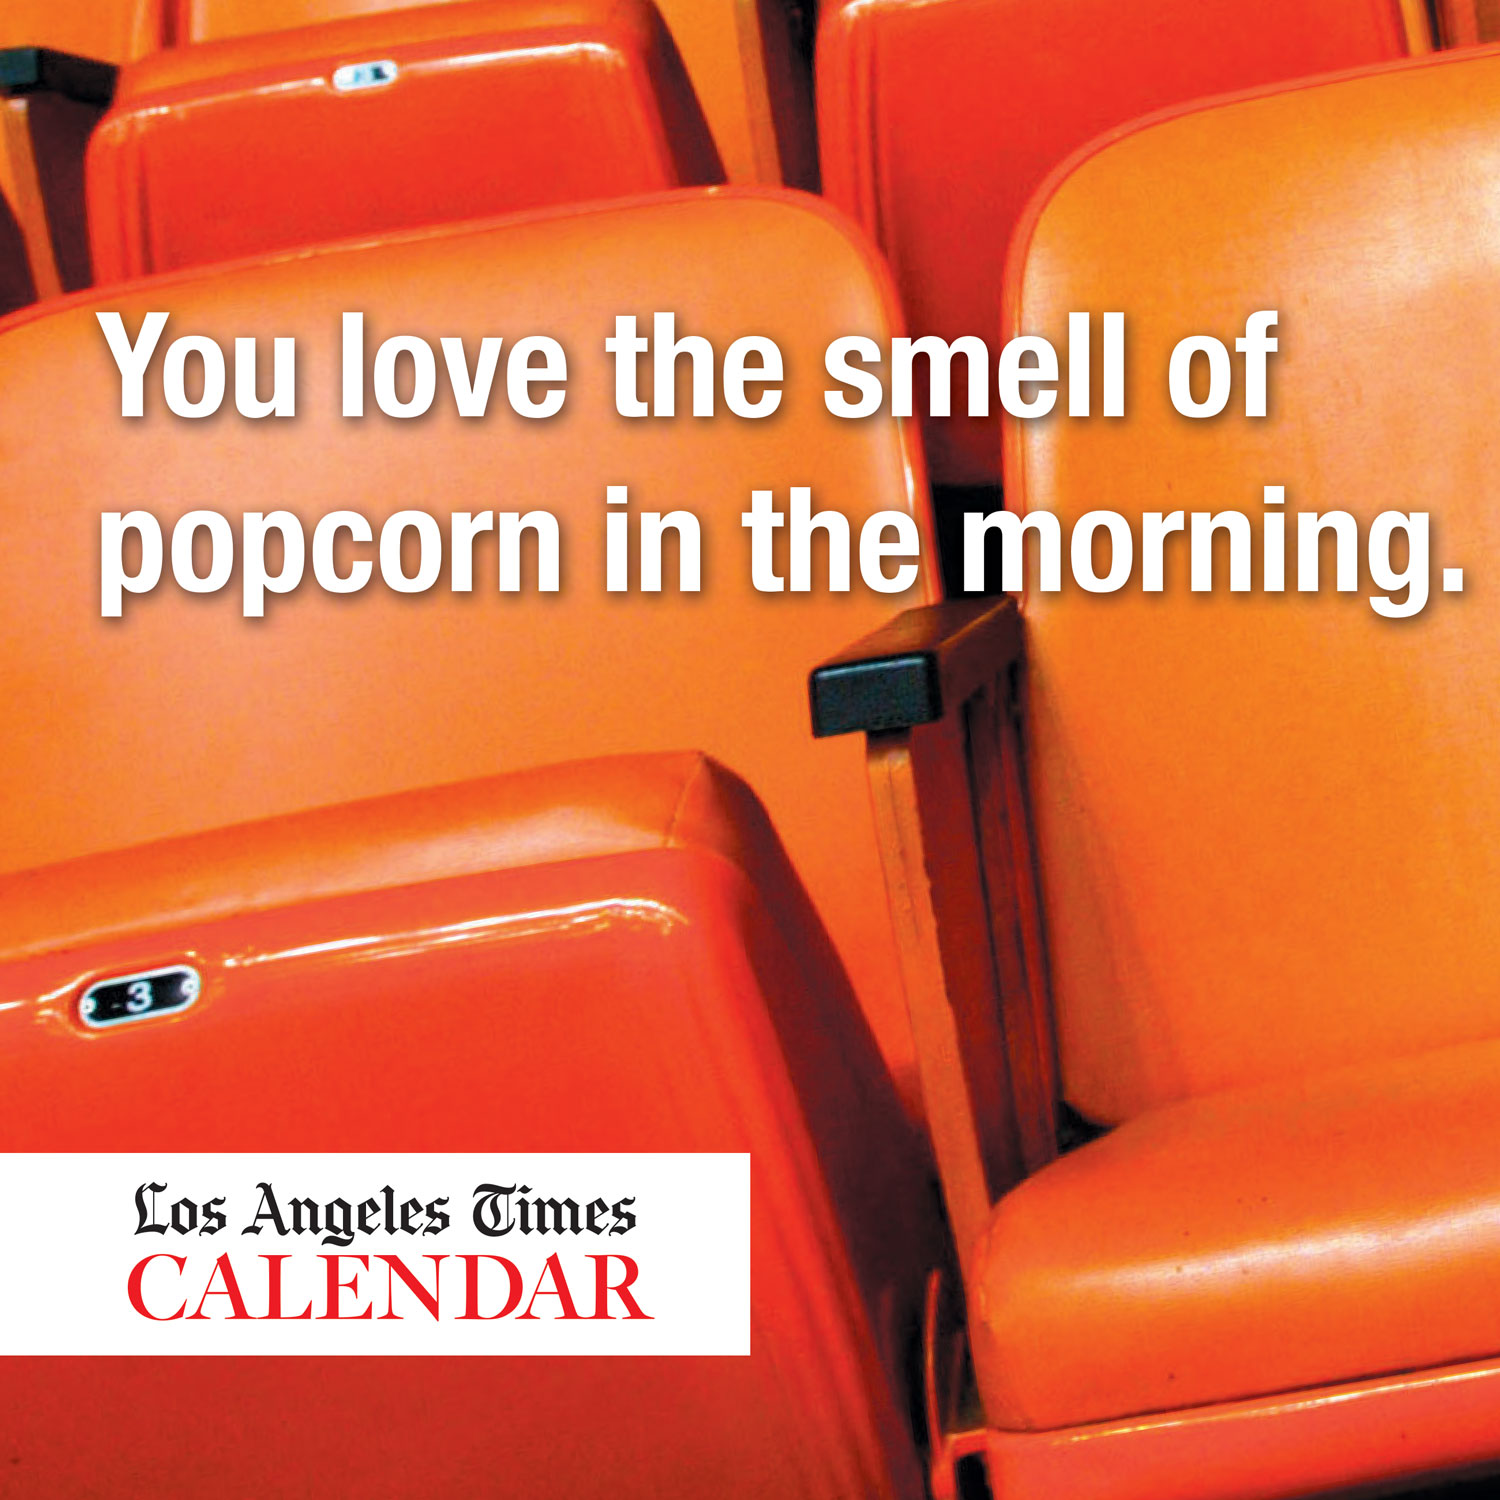 LA TIMES popcorn